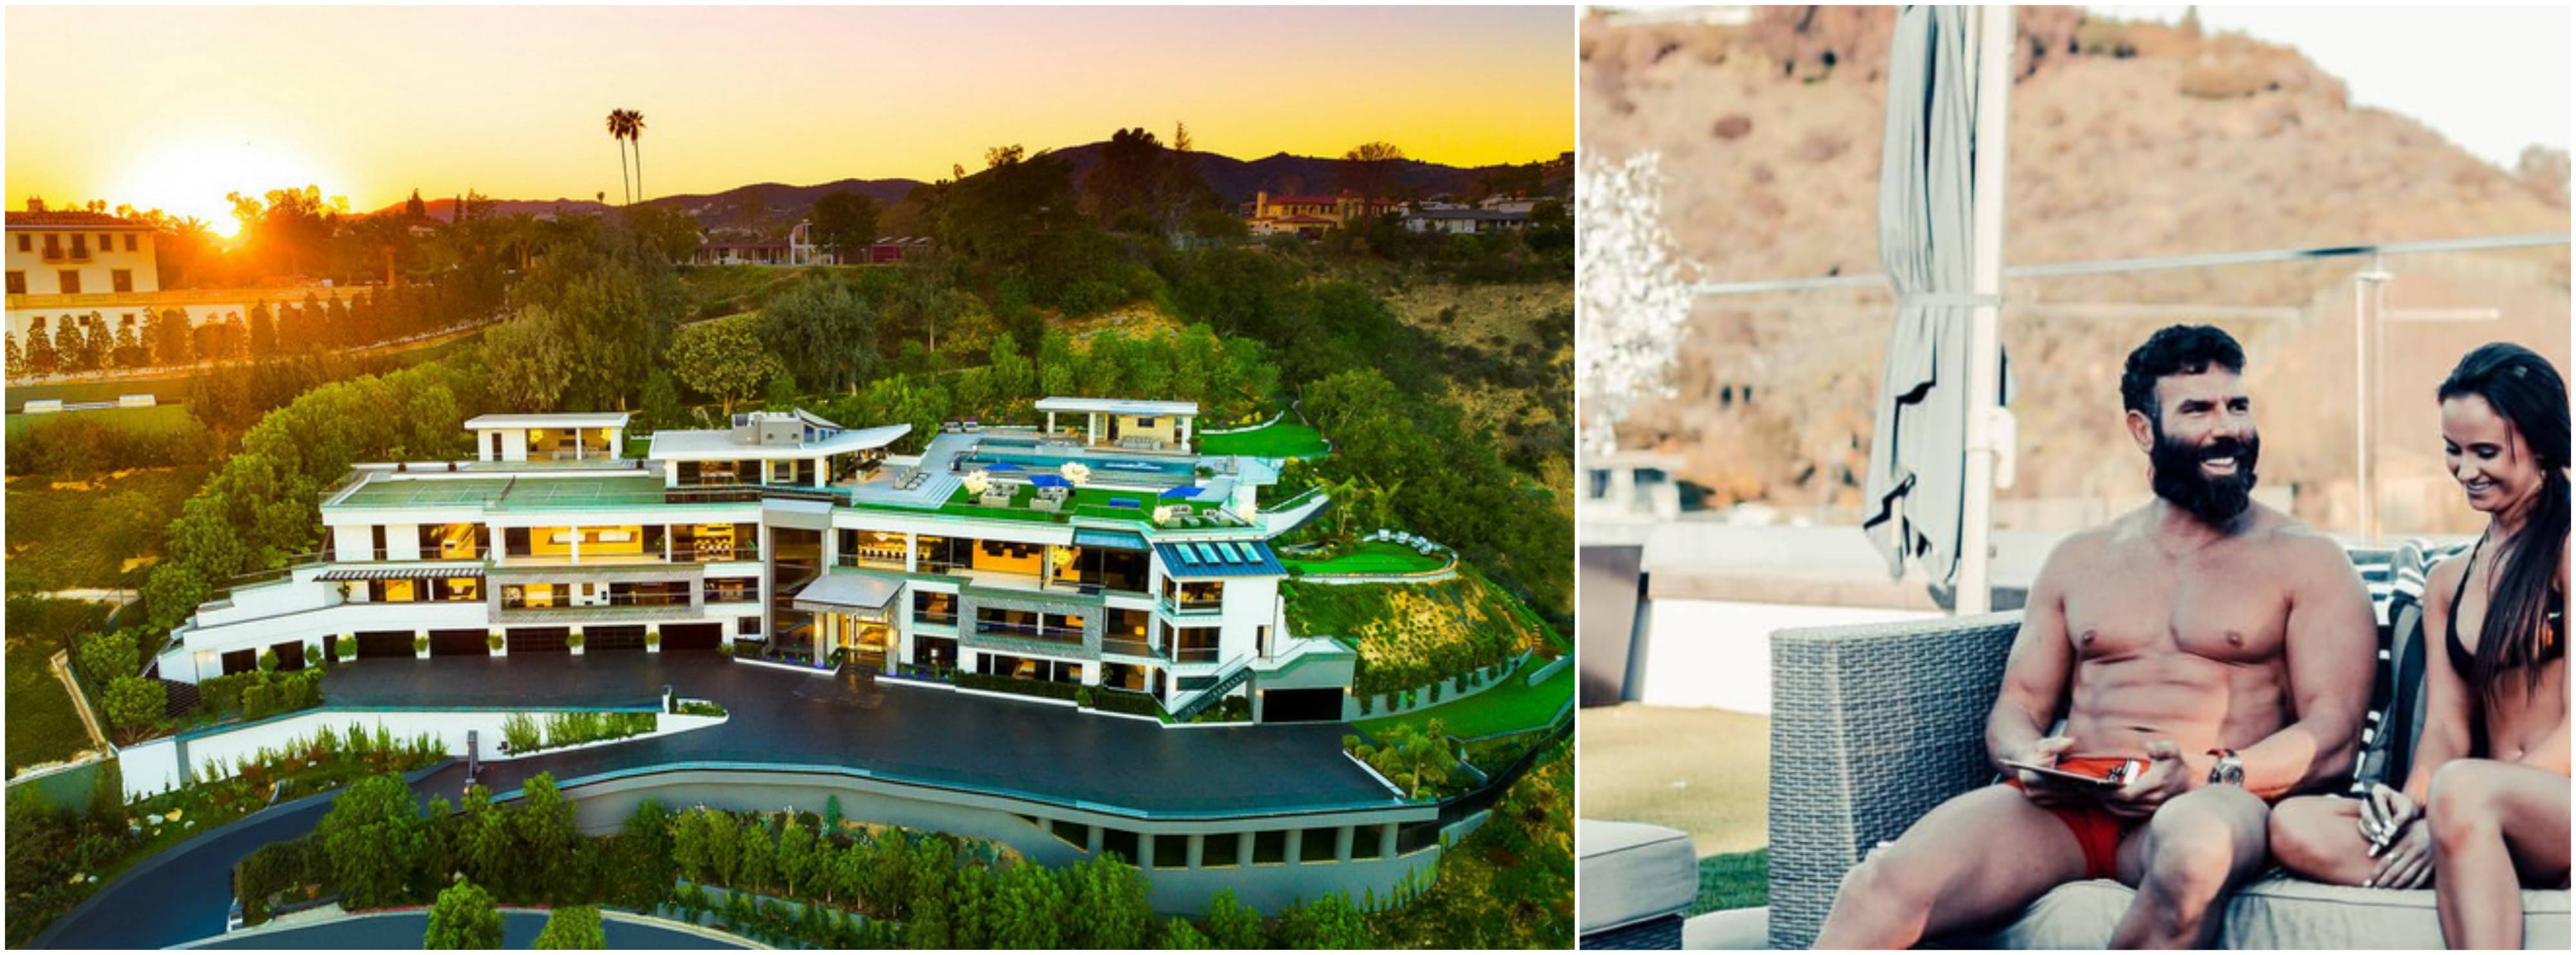 Dan Bilzerian mansion Bel Air Los Angeles 100 million